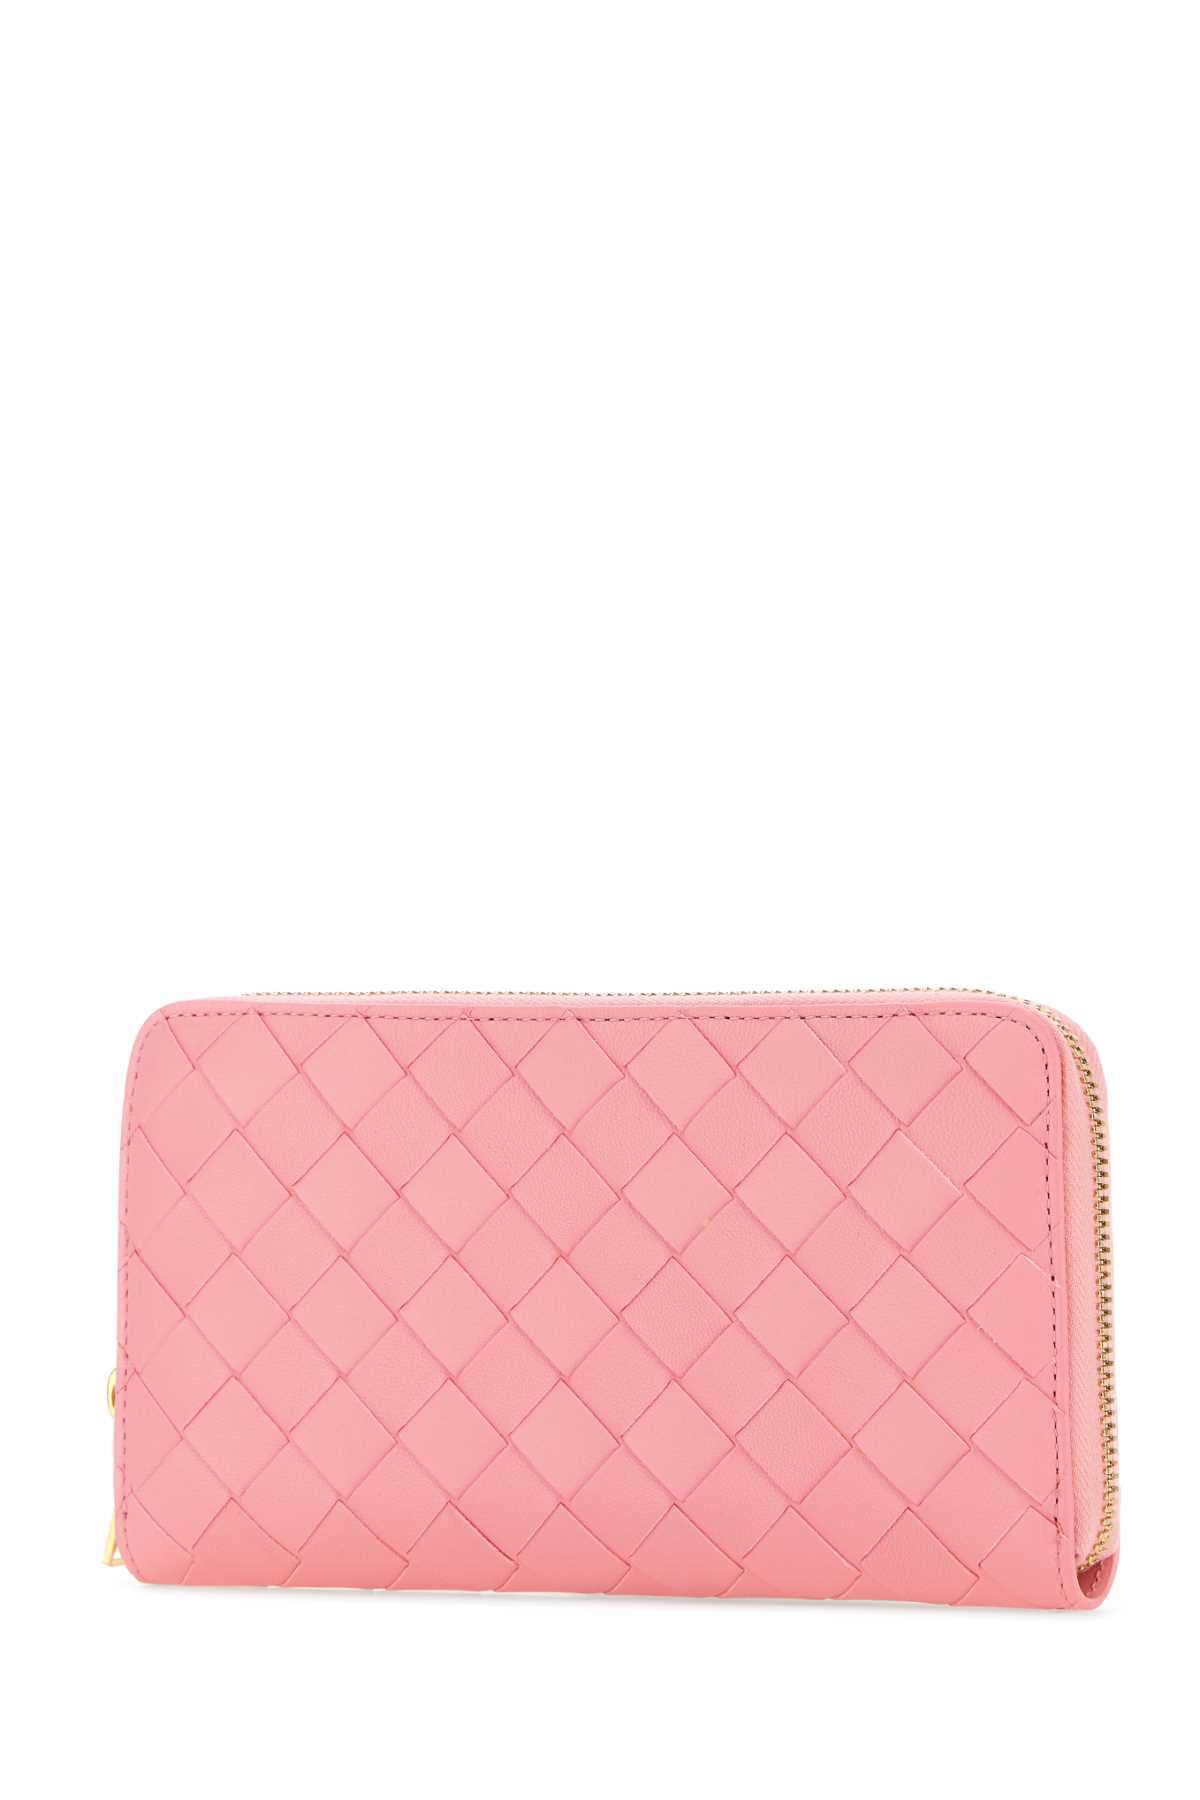 Shop Bottega Veneta Pink Nappa Leather Intrecciato Wallet